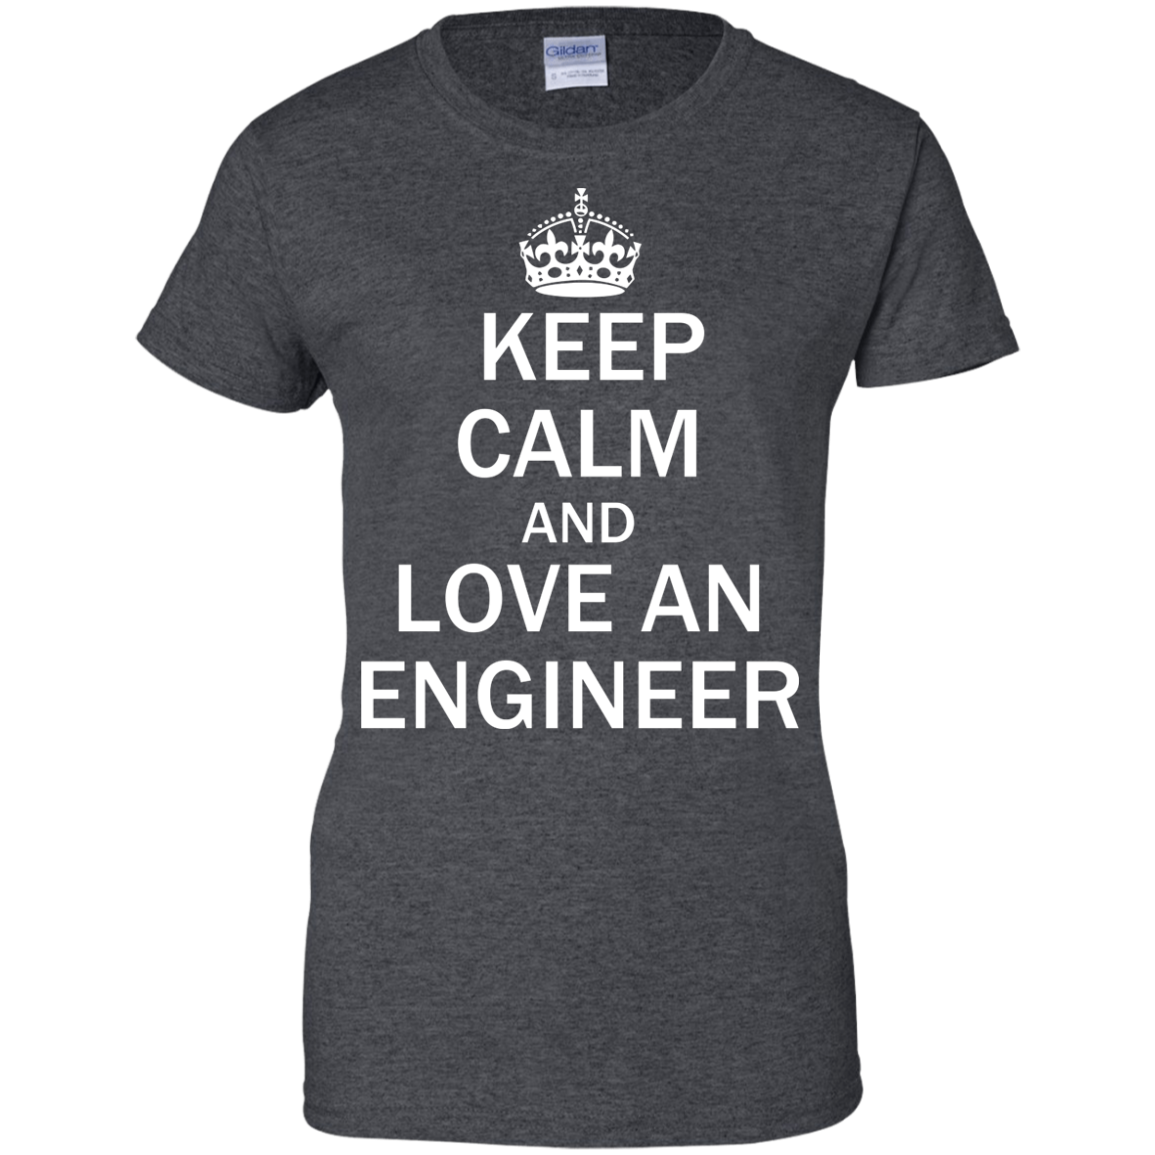 Mantenga la calma y ame a un ingeniero